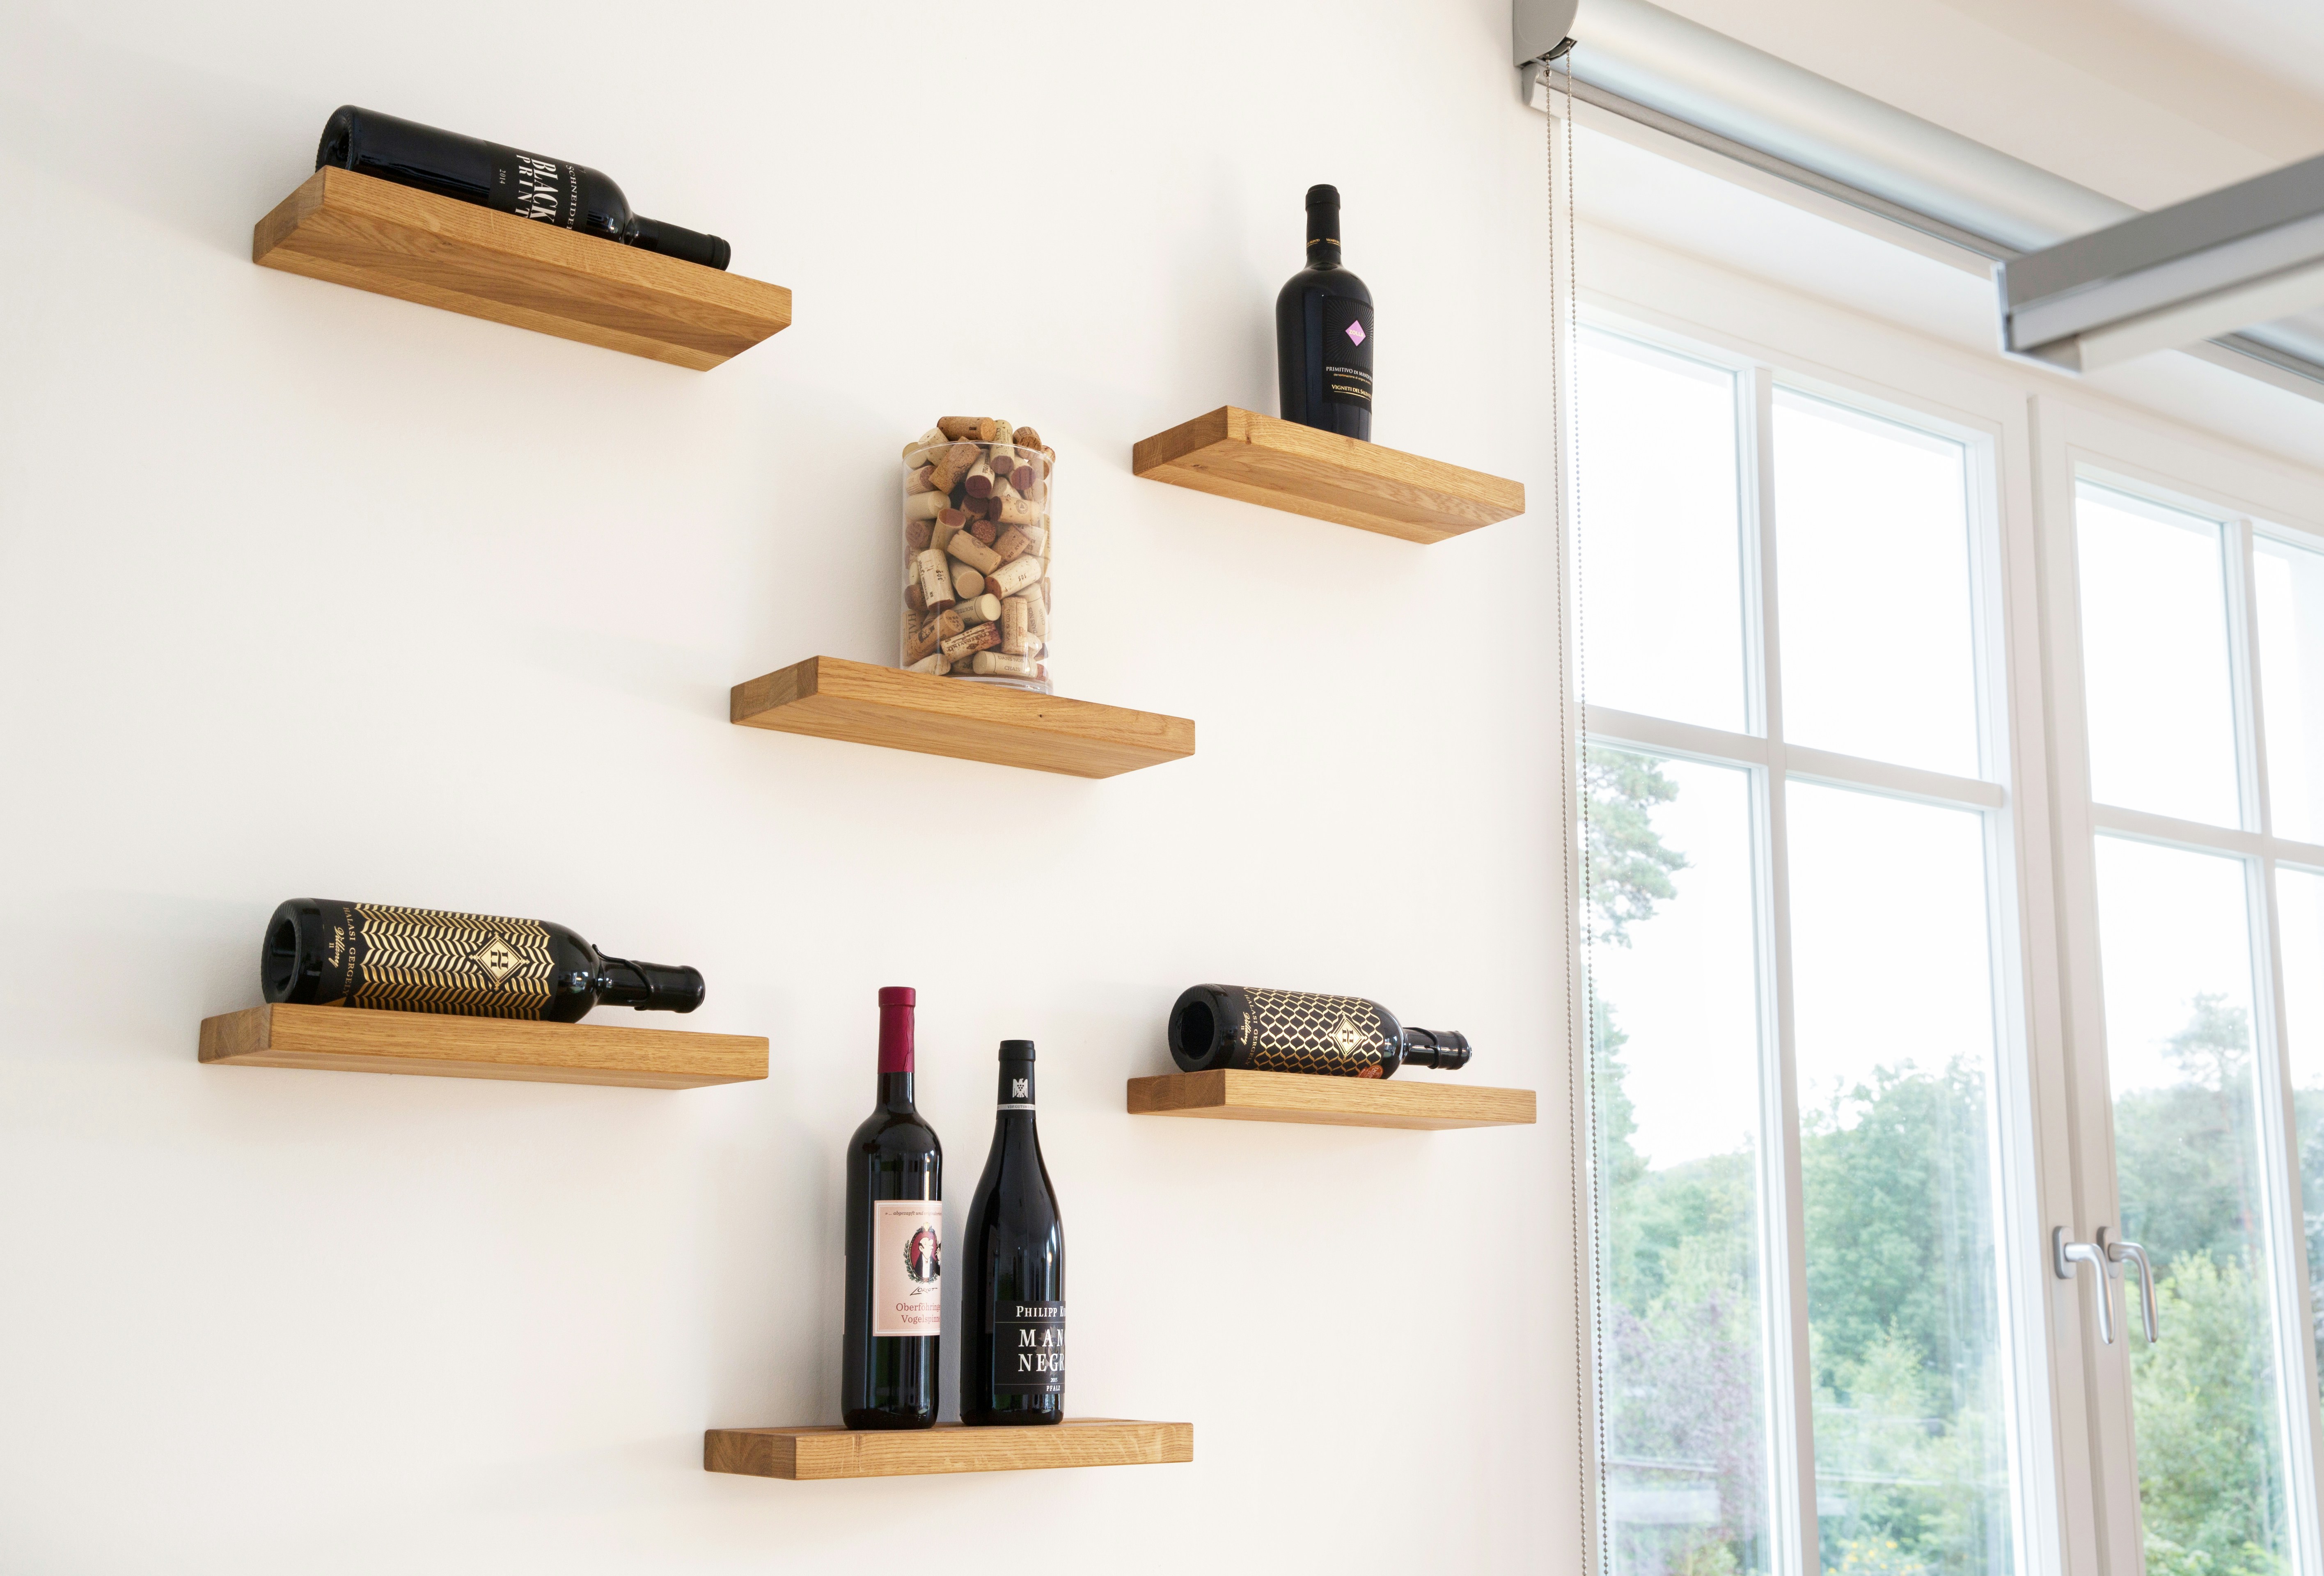 An individual wine shelf made of solid oak wood.